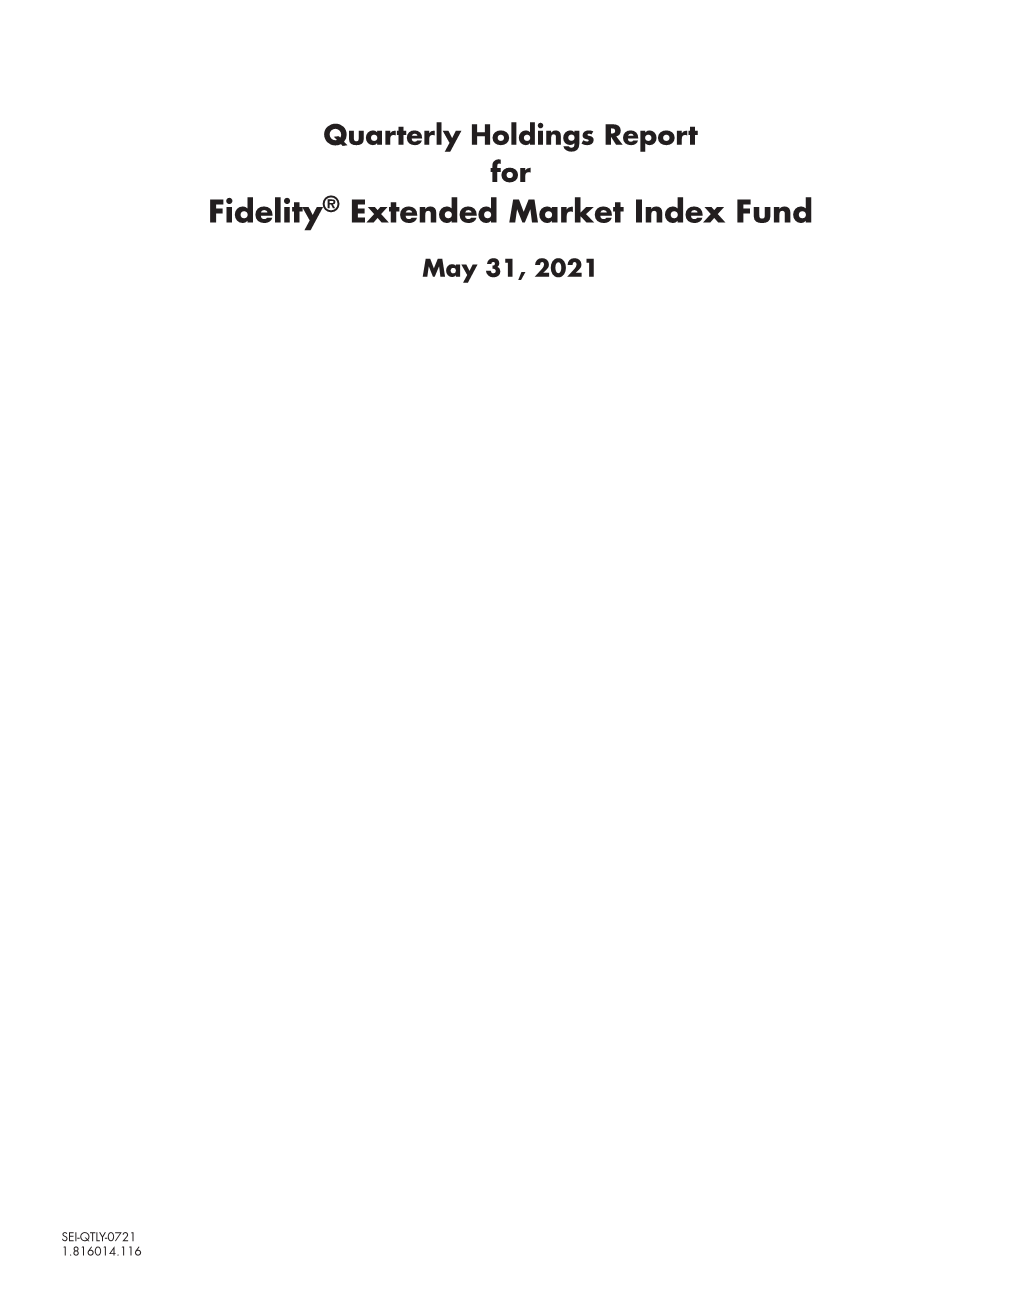 Fidelity® Extended Market Index Fund